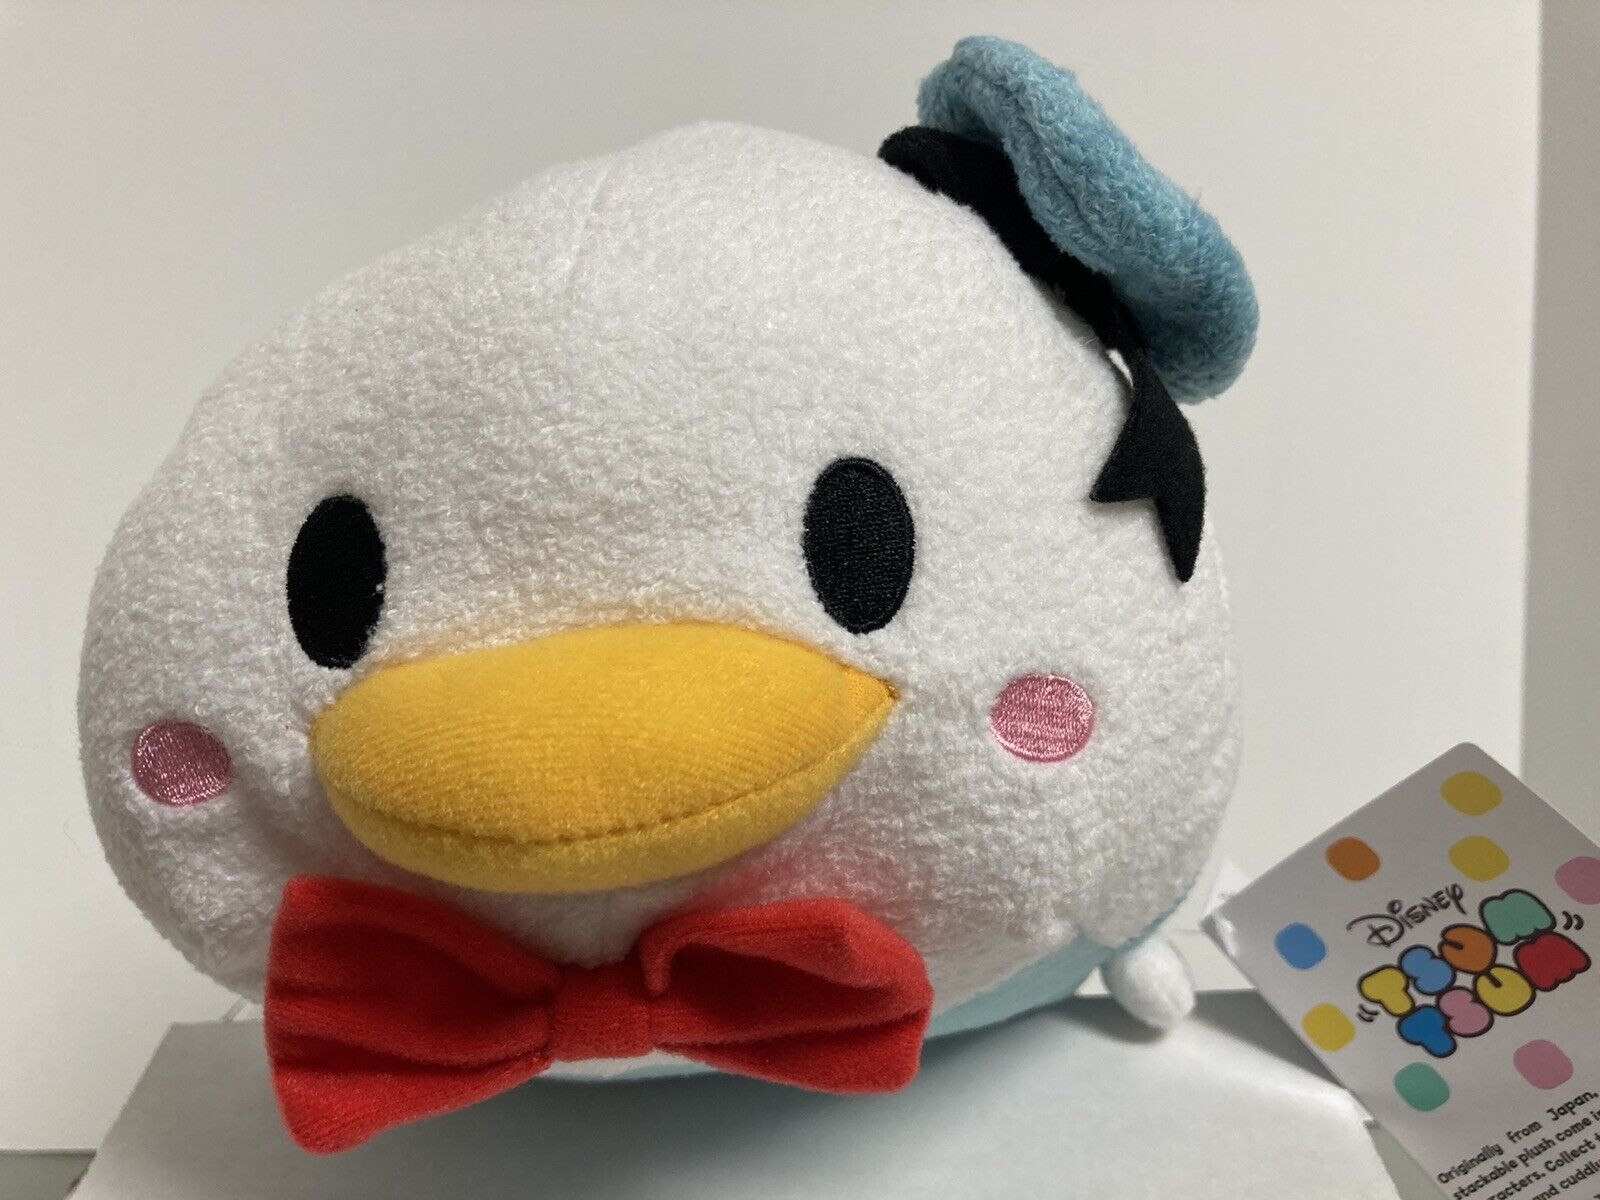 Disney Store “Donald Duck” 11” Medium Tsum Tsum - NEW with Original Tags